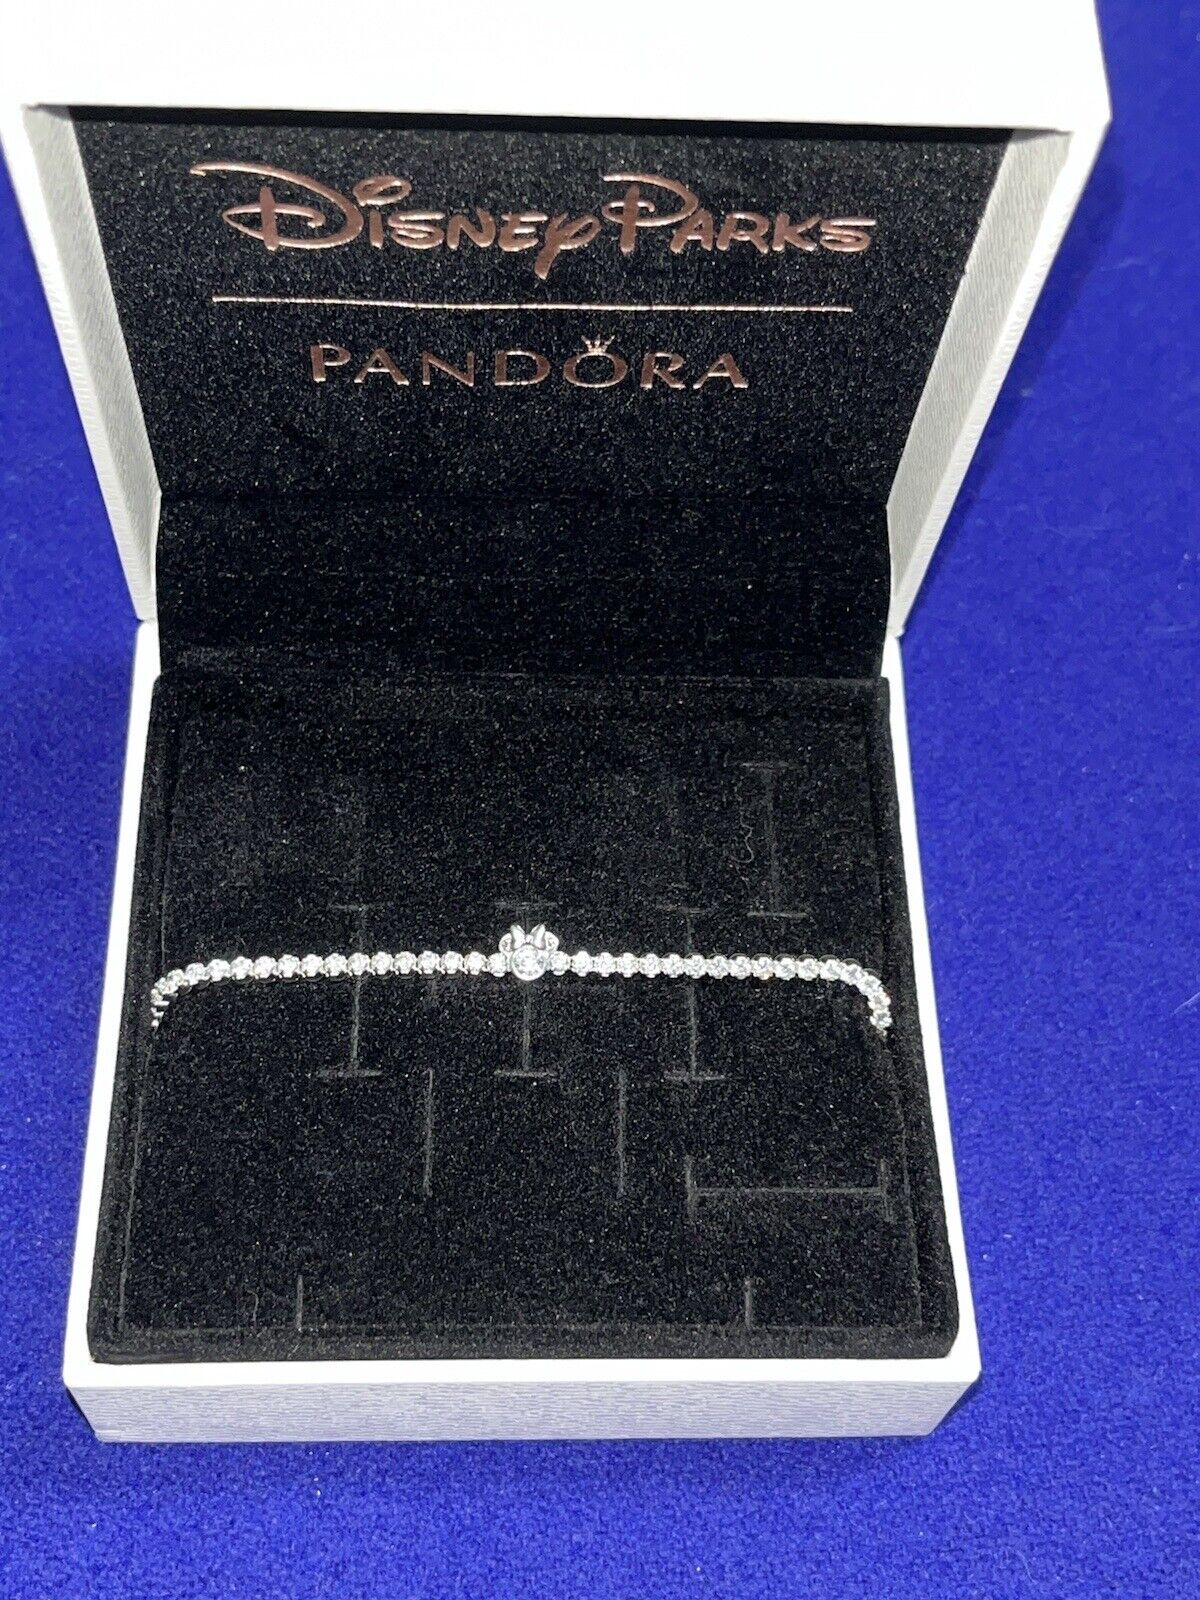 Optimal Wrongdoing Colonel PANDORA 925 Disney Minnie Mouse CZ Tennis Bracelet NEW PICK 1 M OR L | eBay